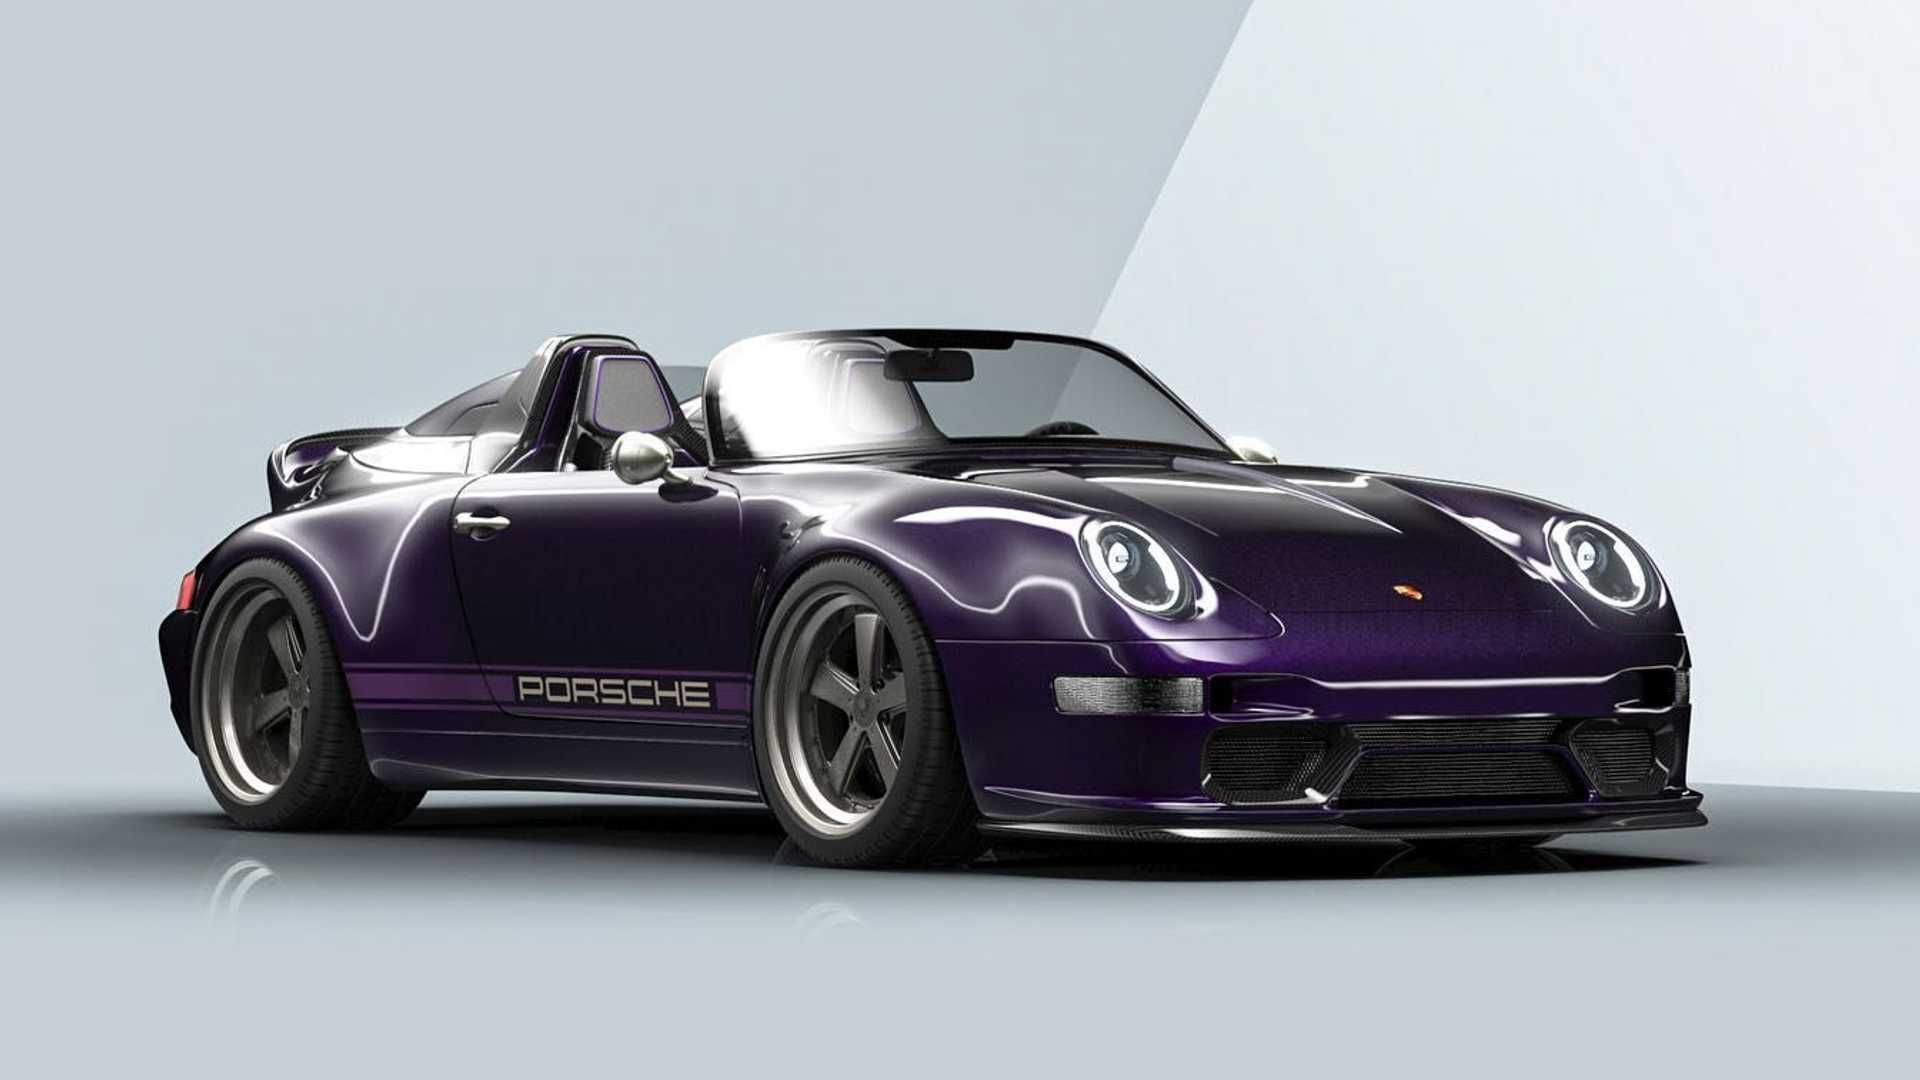 gunther-werks-purple-porsche-993-speedster-commission-low-angle-front